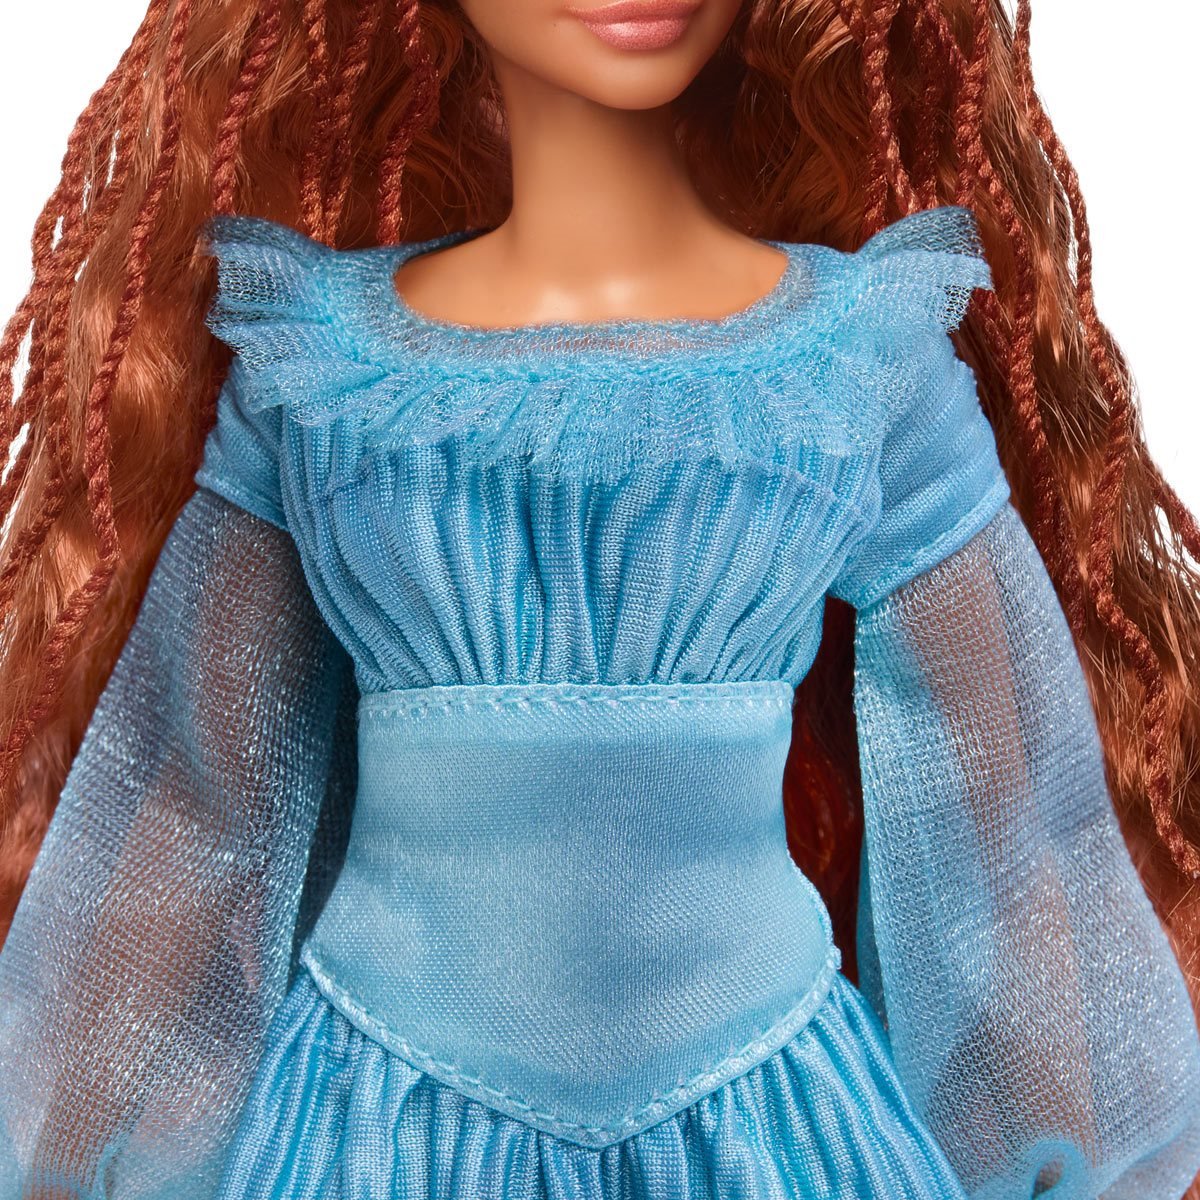 The Little Mermaid Ariel Land Doll